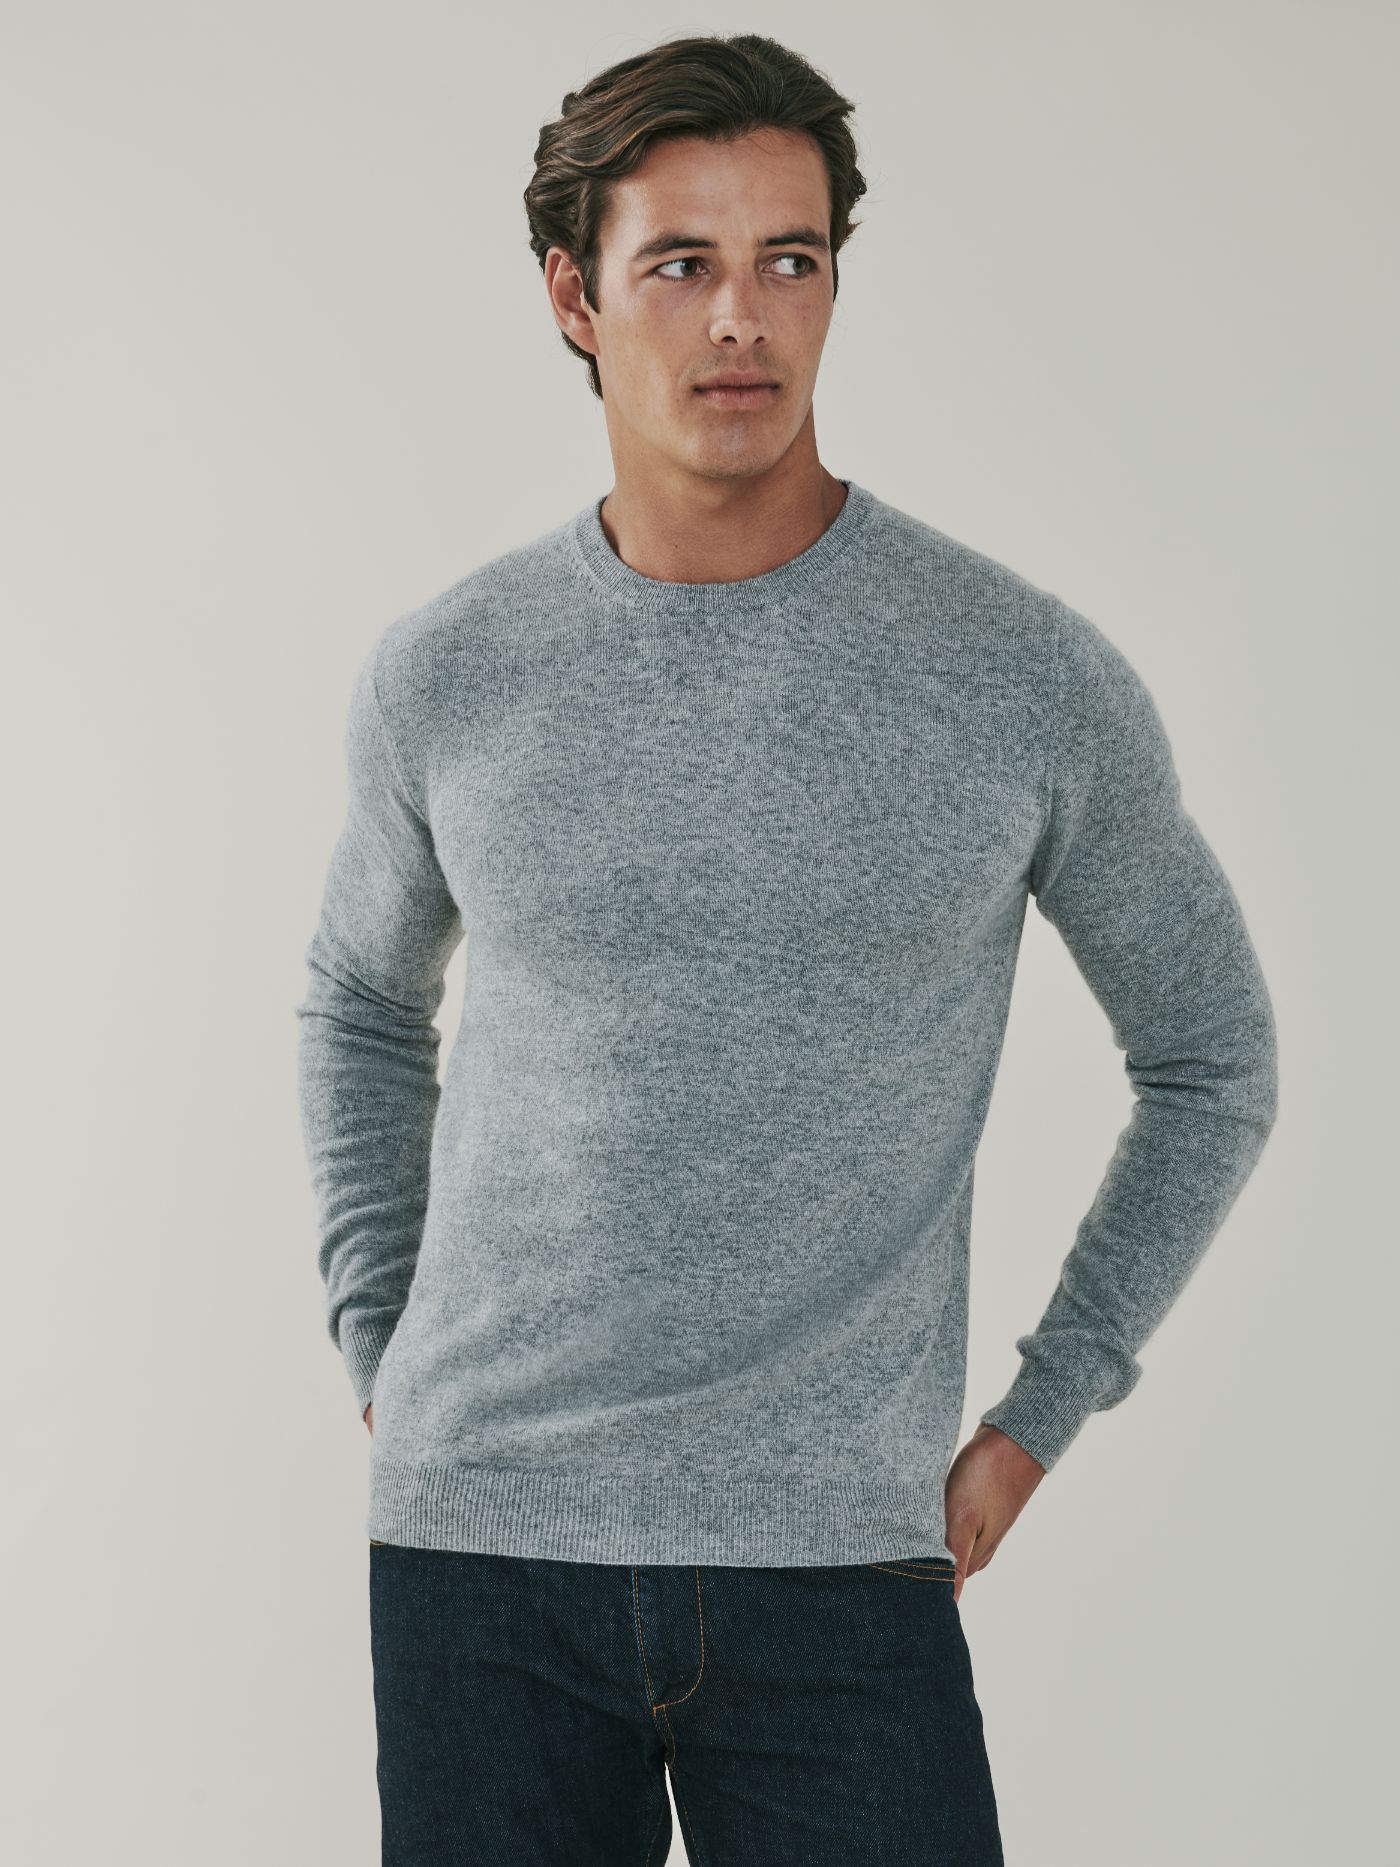 Men's Cashmere Crew Neck Sweater in Light Grey | MrQuintessential